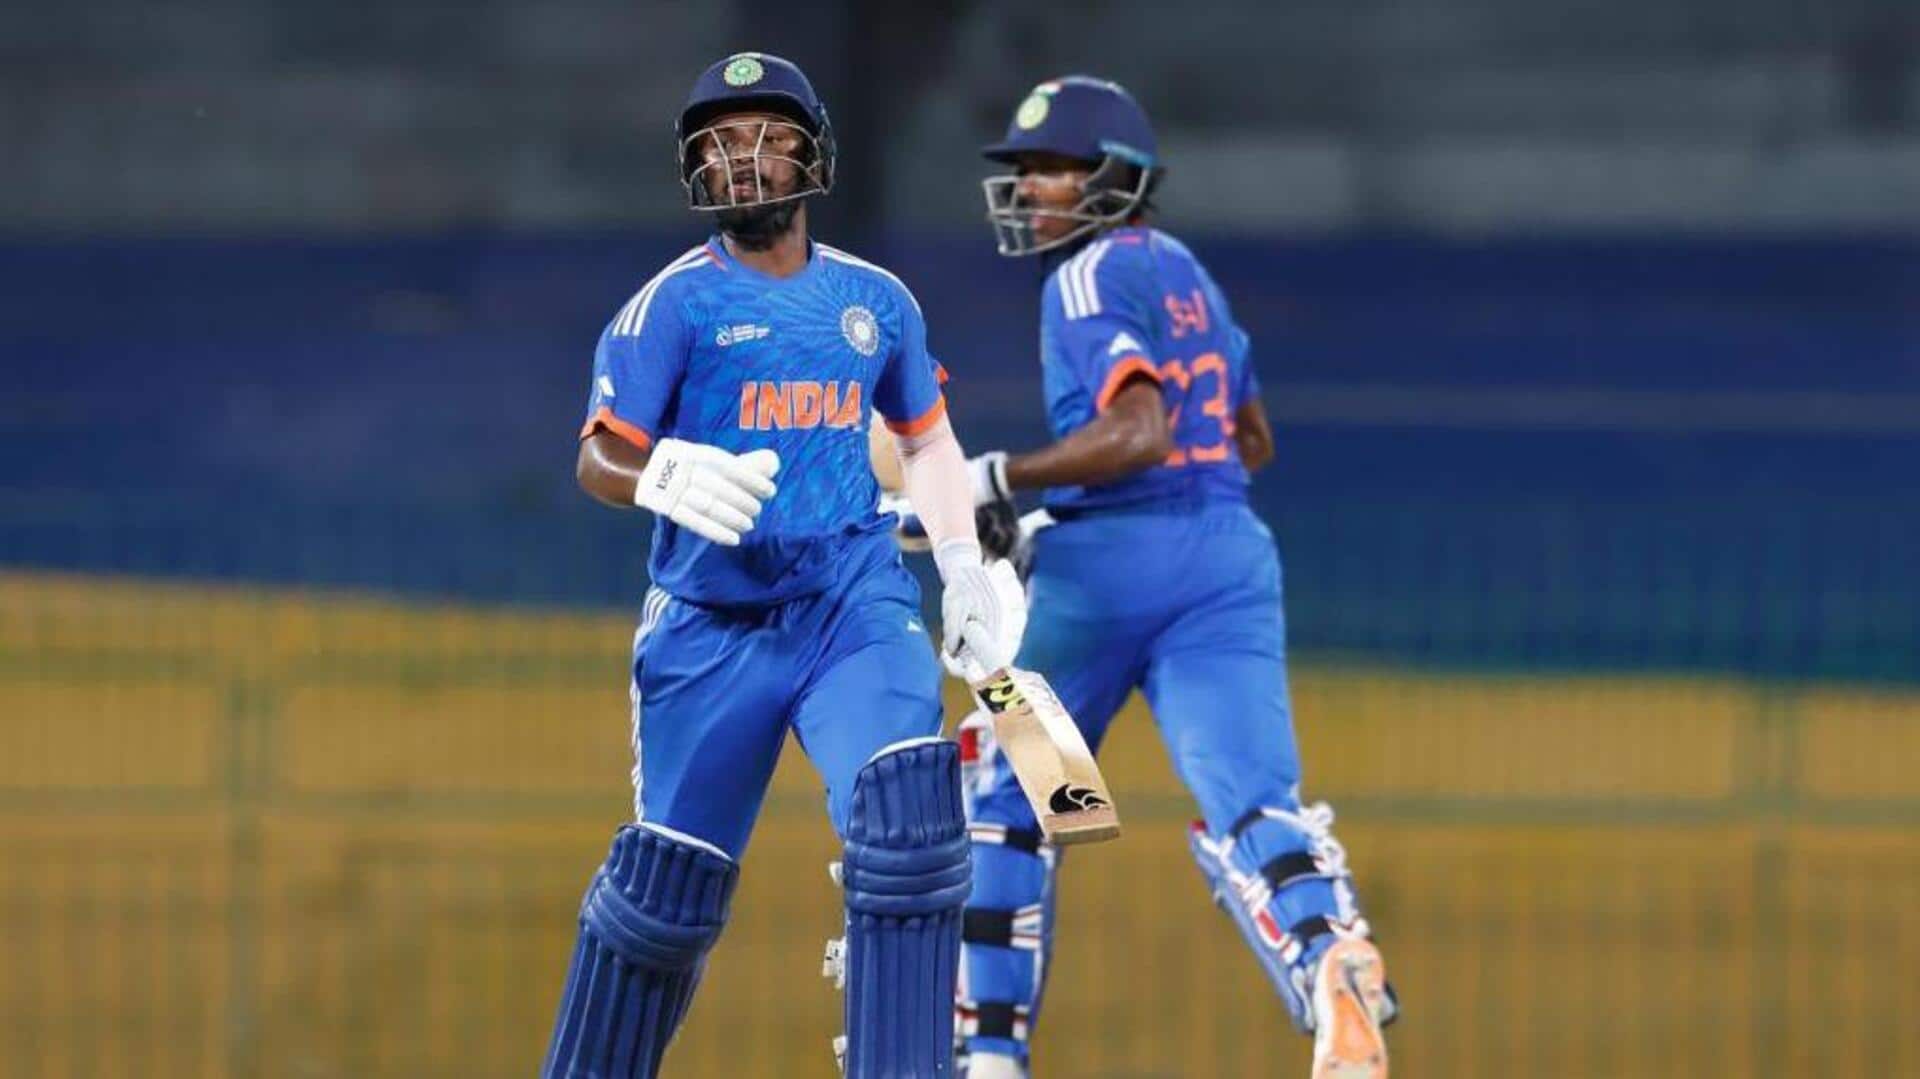 Emerging Asia Cup: Sai Sudharsan's heroics help India thrash Pakistan